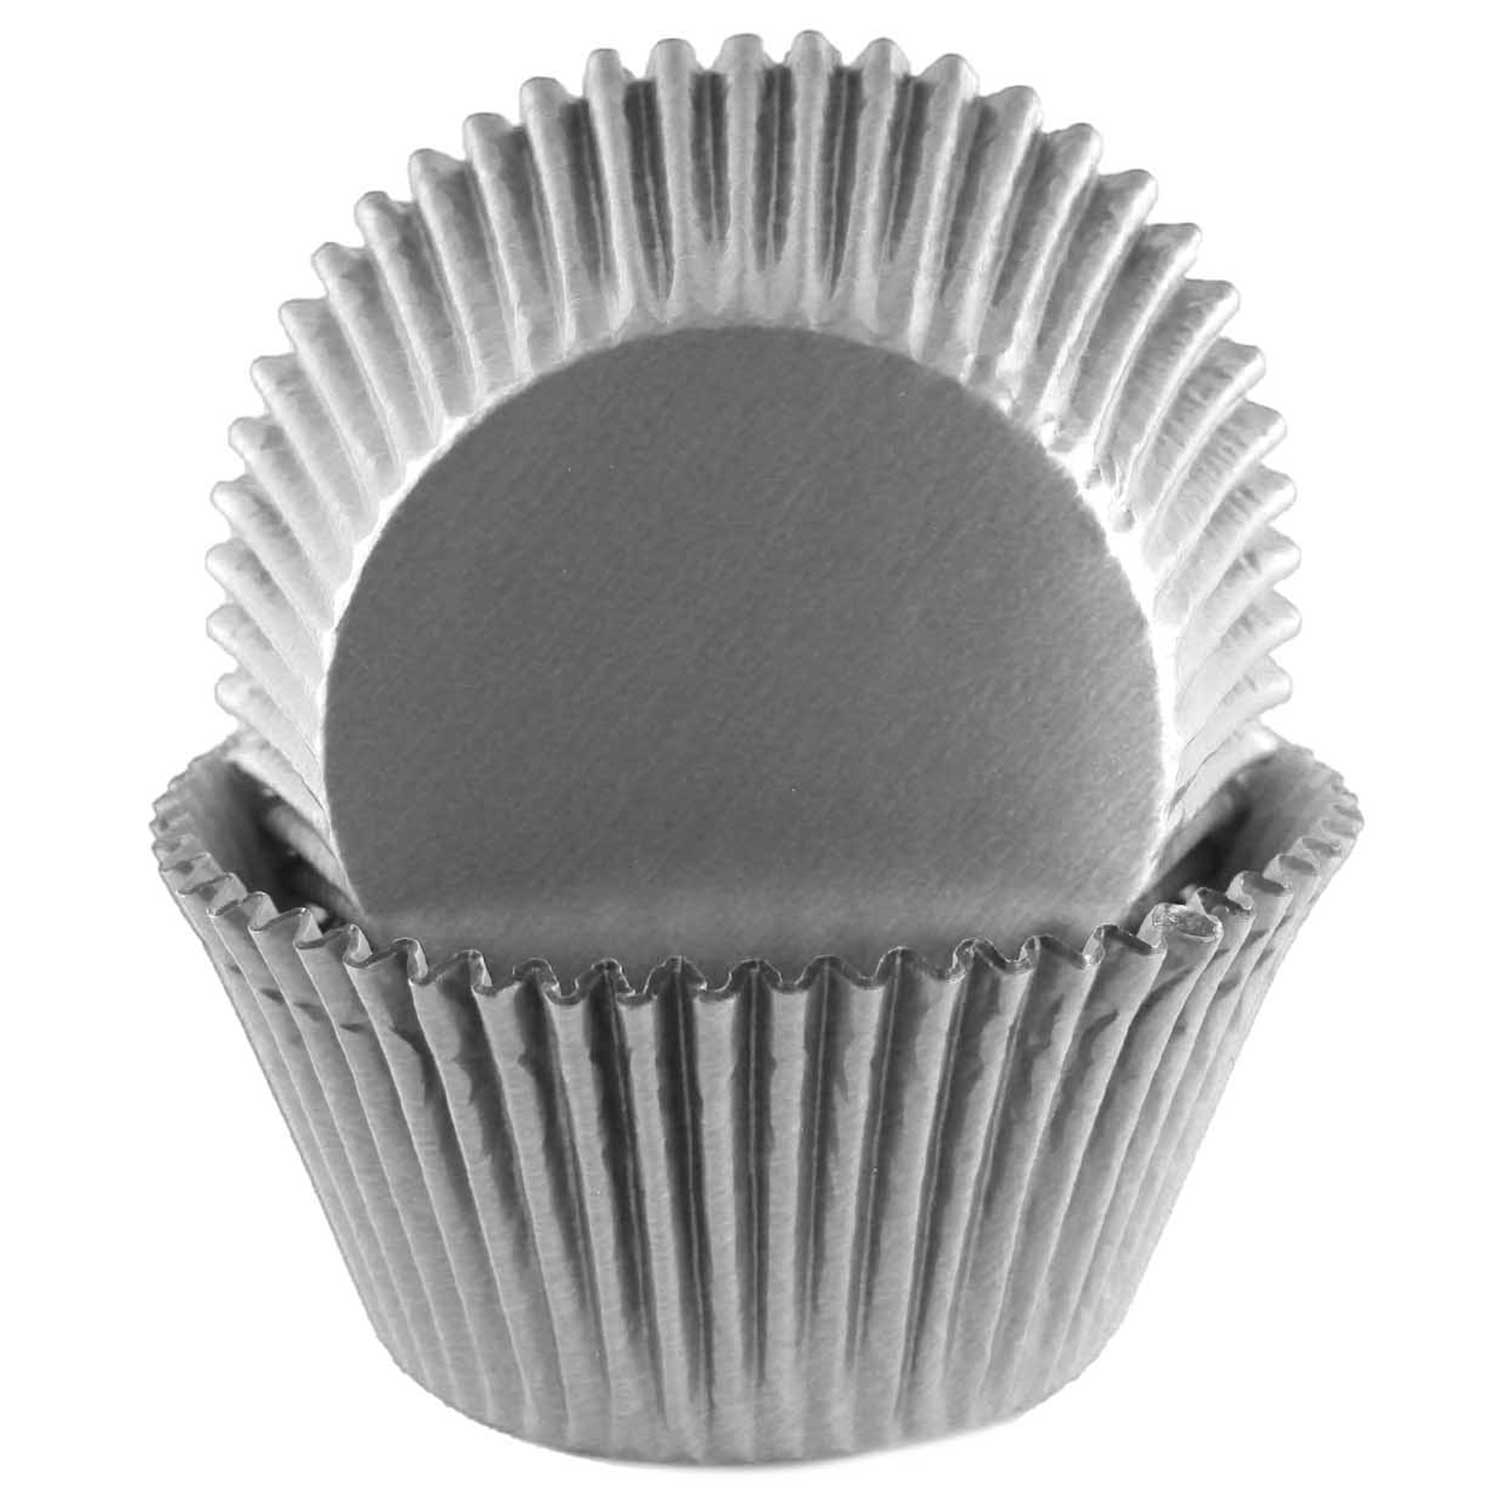 Grey Foil Jumbo Cupcake Liners - Country Kitchen SweetArt